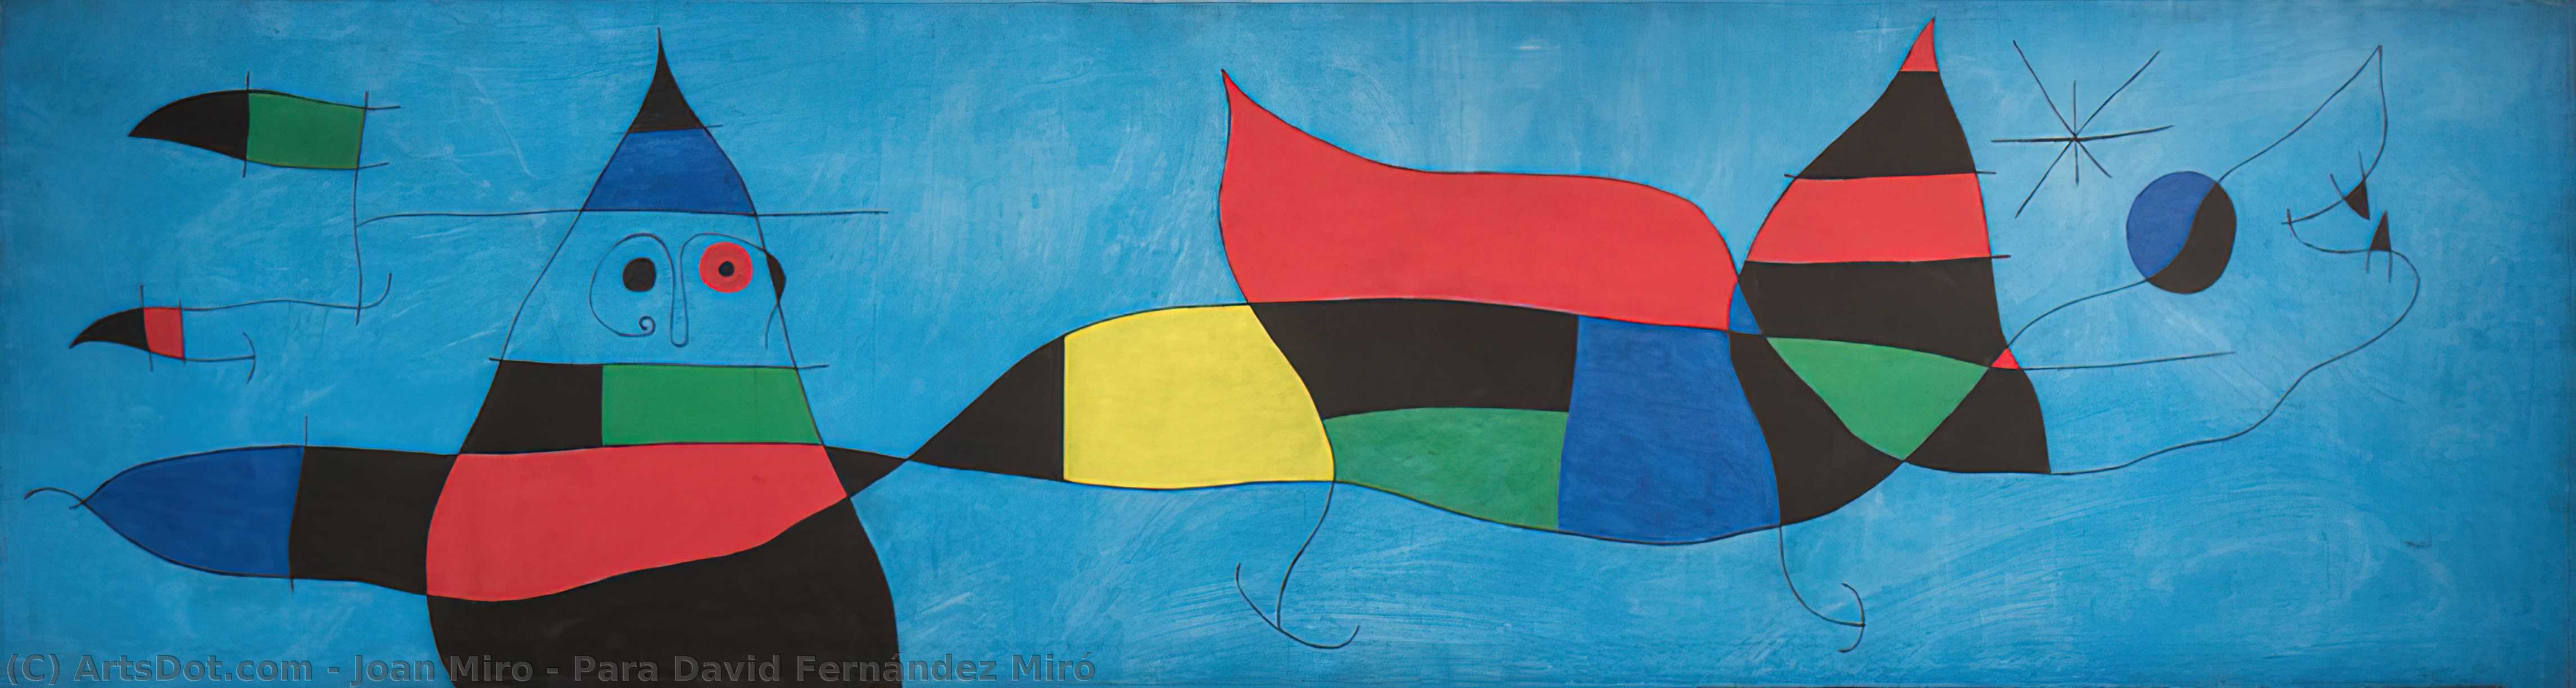 Wikoo.org - موسوعة الفنون الجميلة - اللوحة، العمل الفني Joan Miro - Para David Fernández Miró